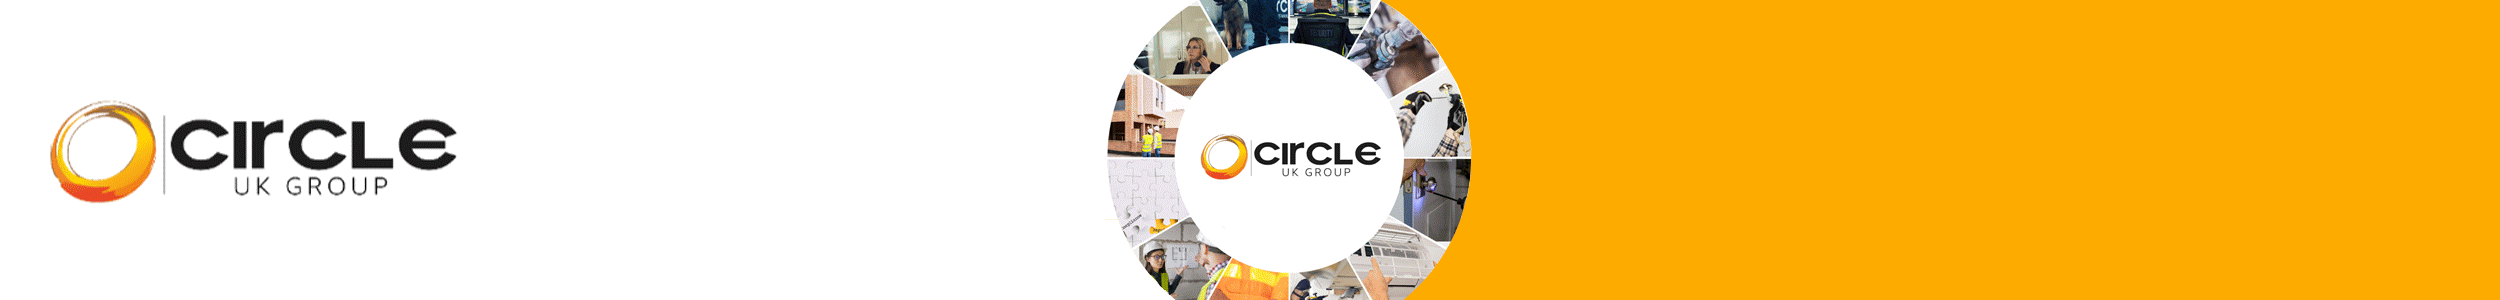 Circle UK Group